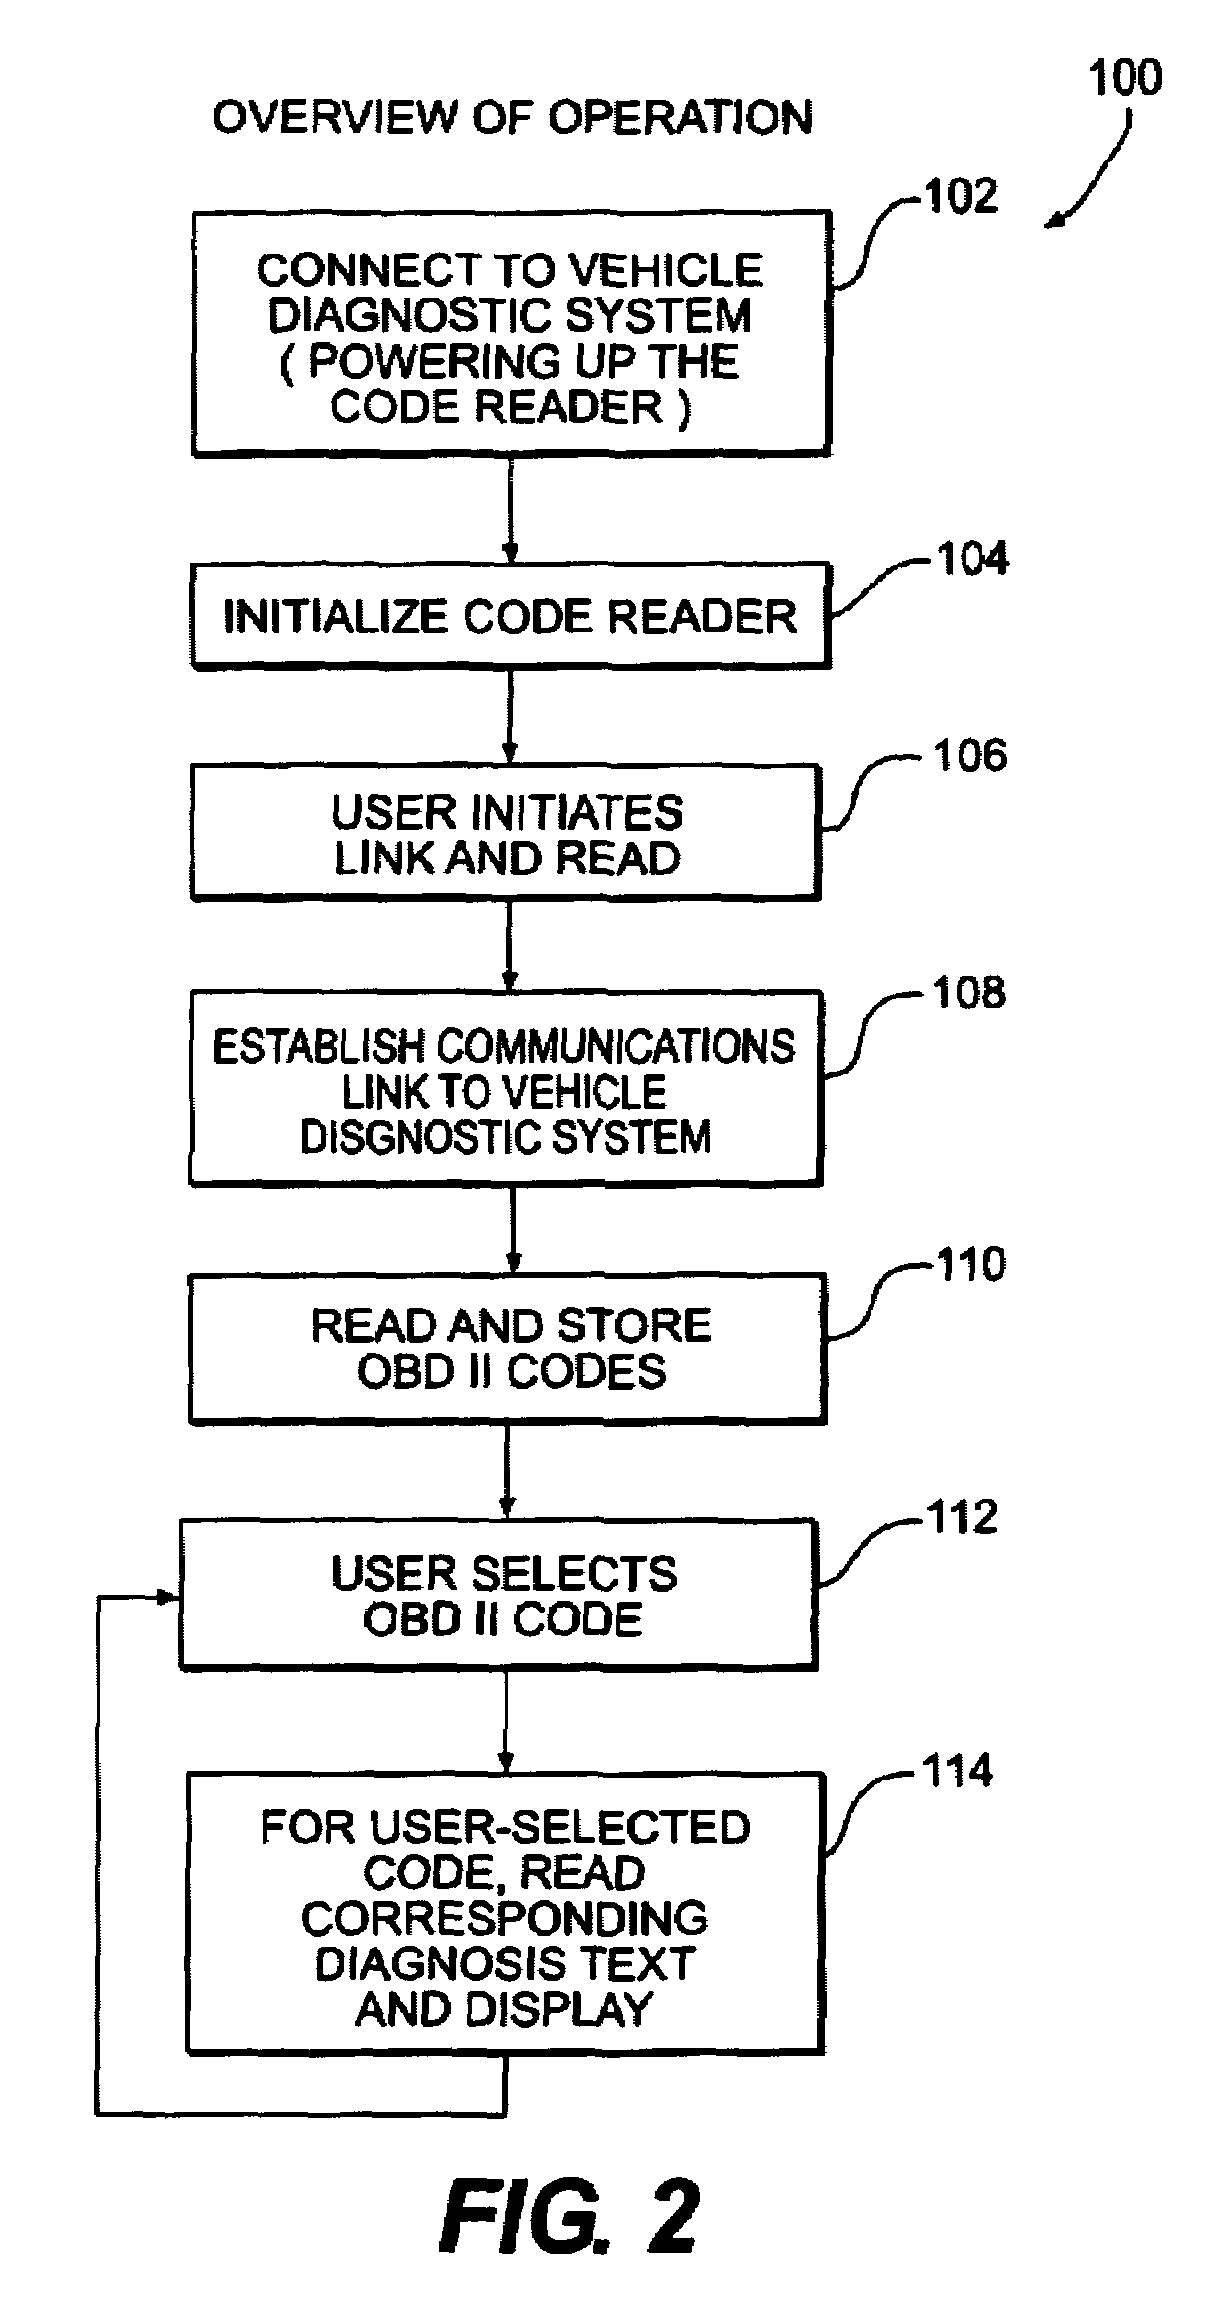 Code reader display